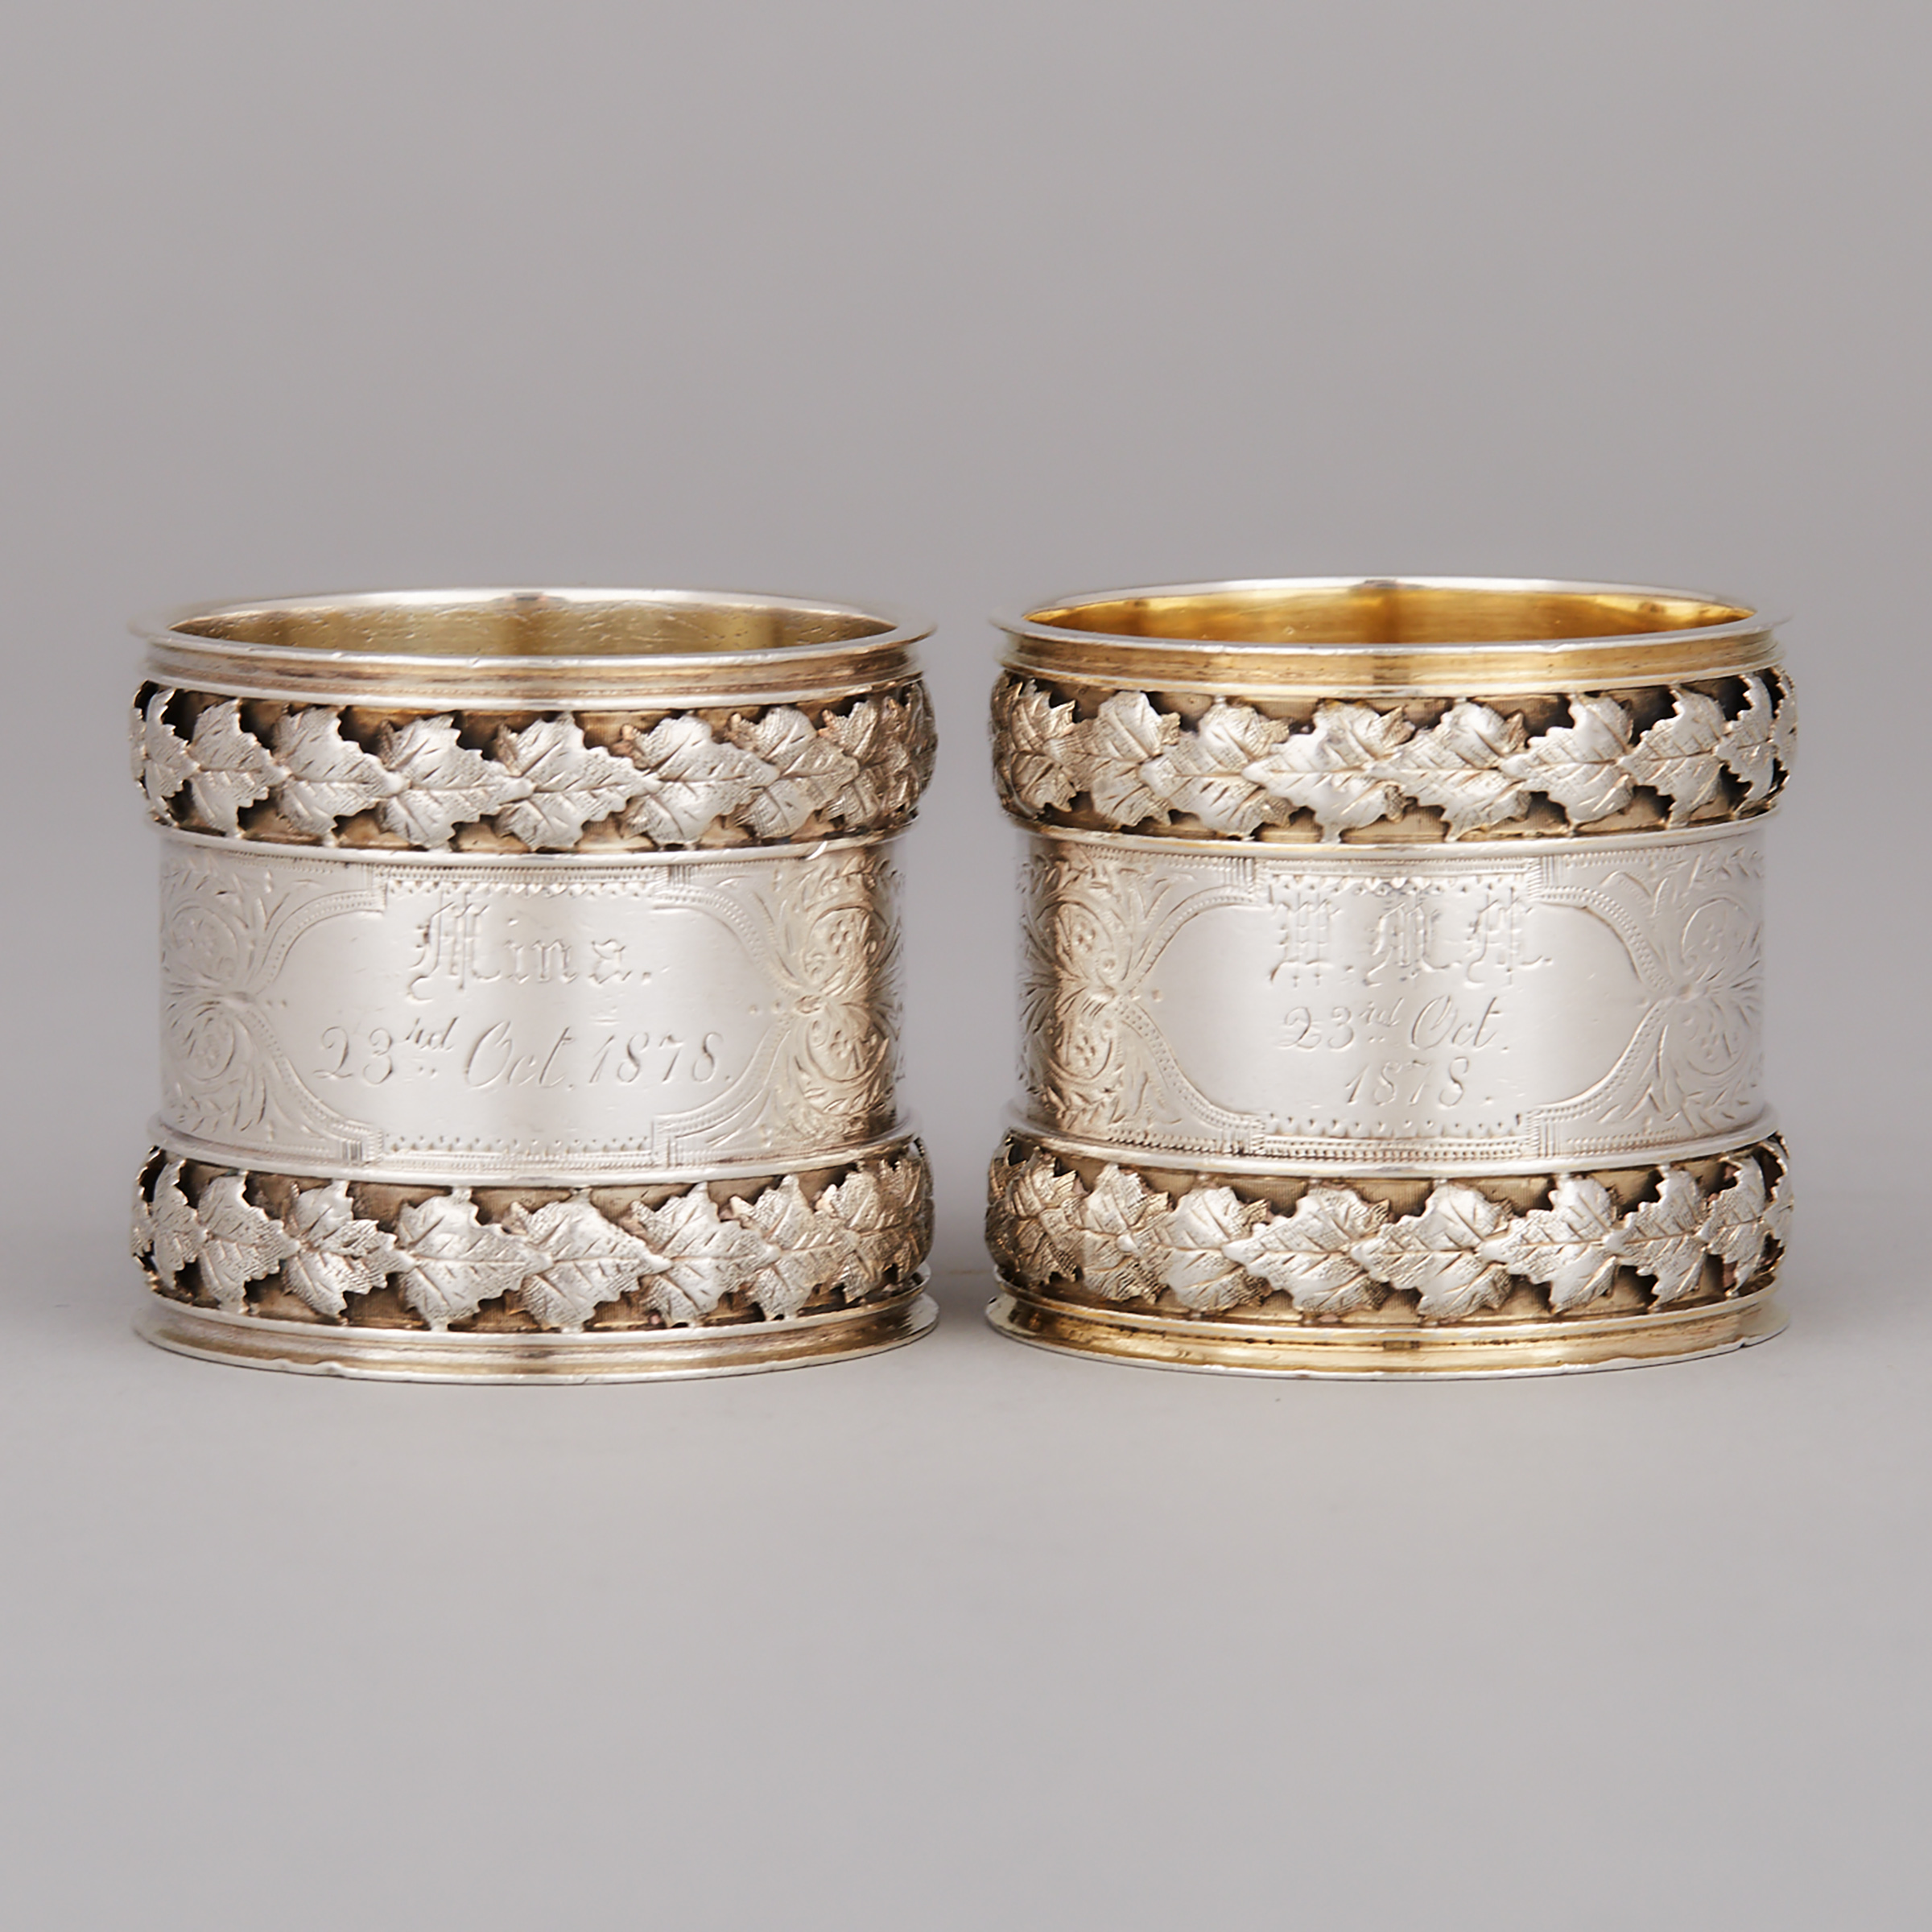 Pair of Canadian Silver Napkin Rings, Gustavus Seifert, Quebec City, Que., c.1878